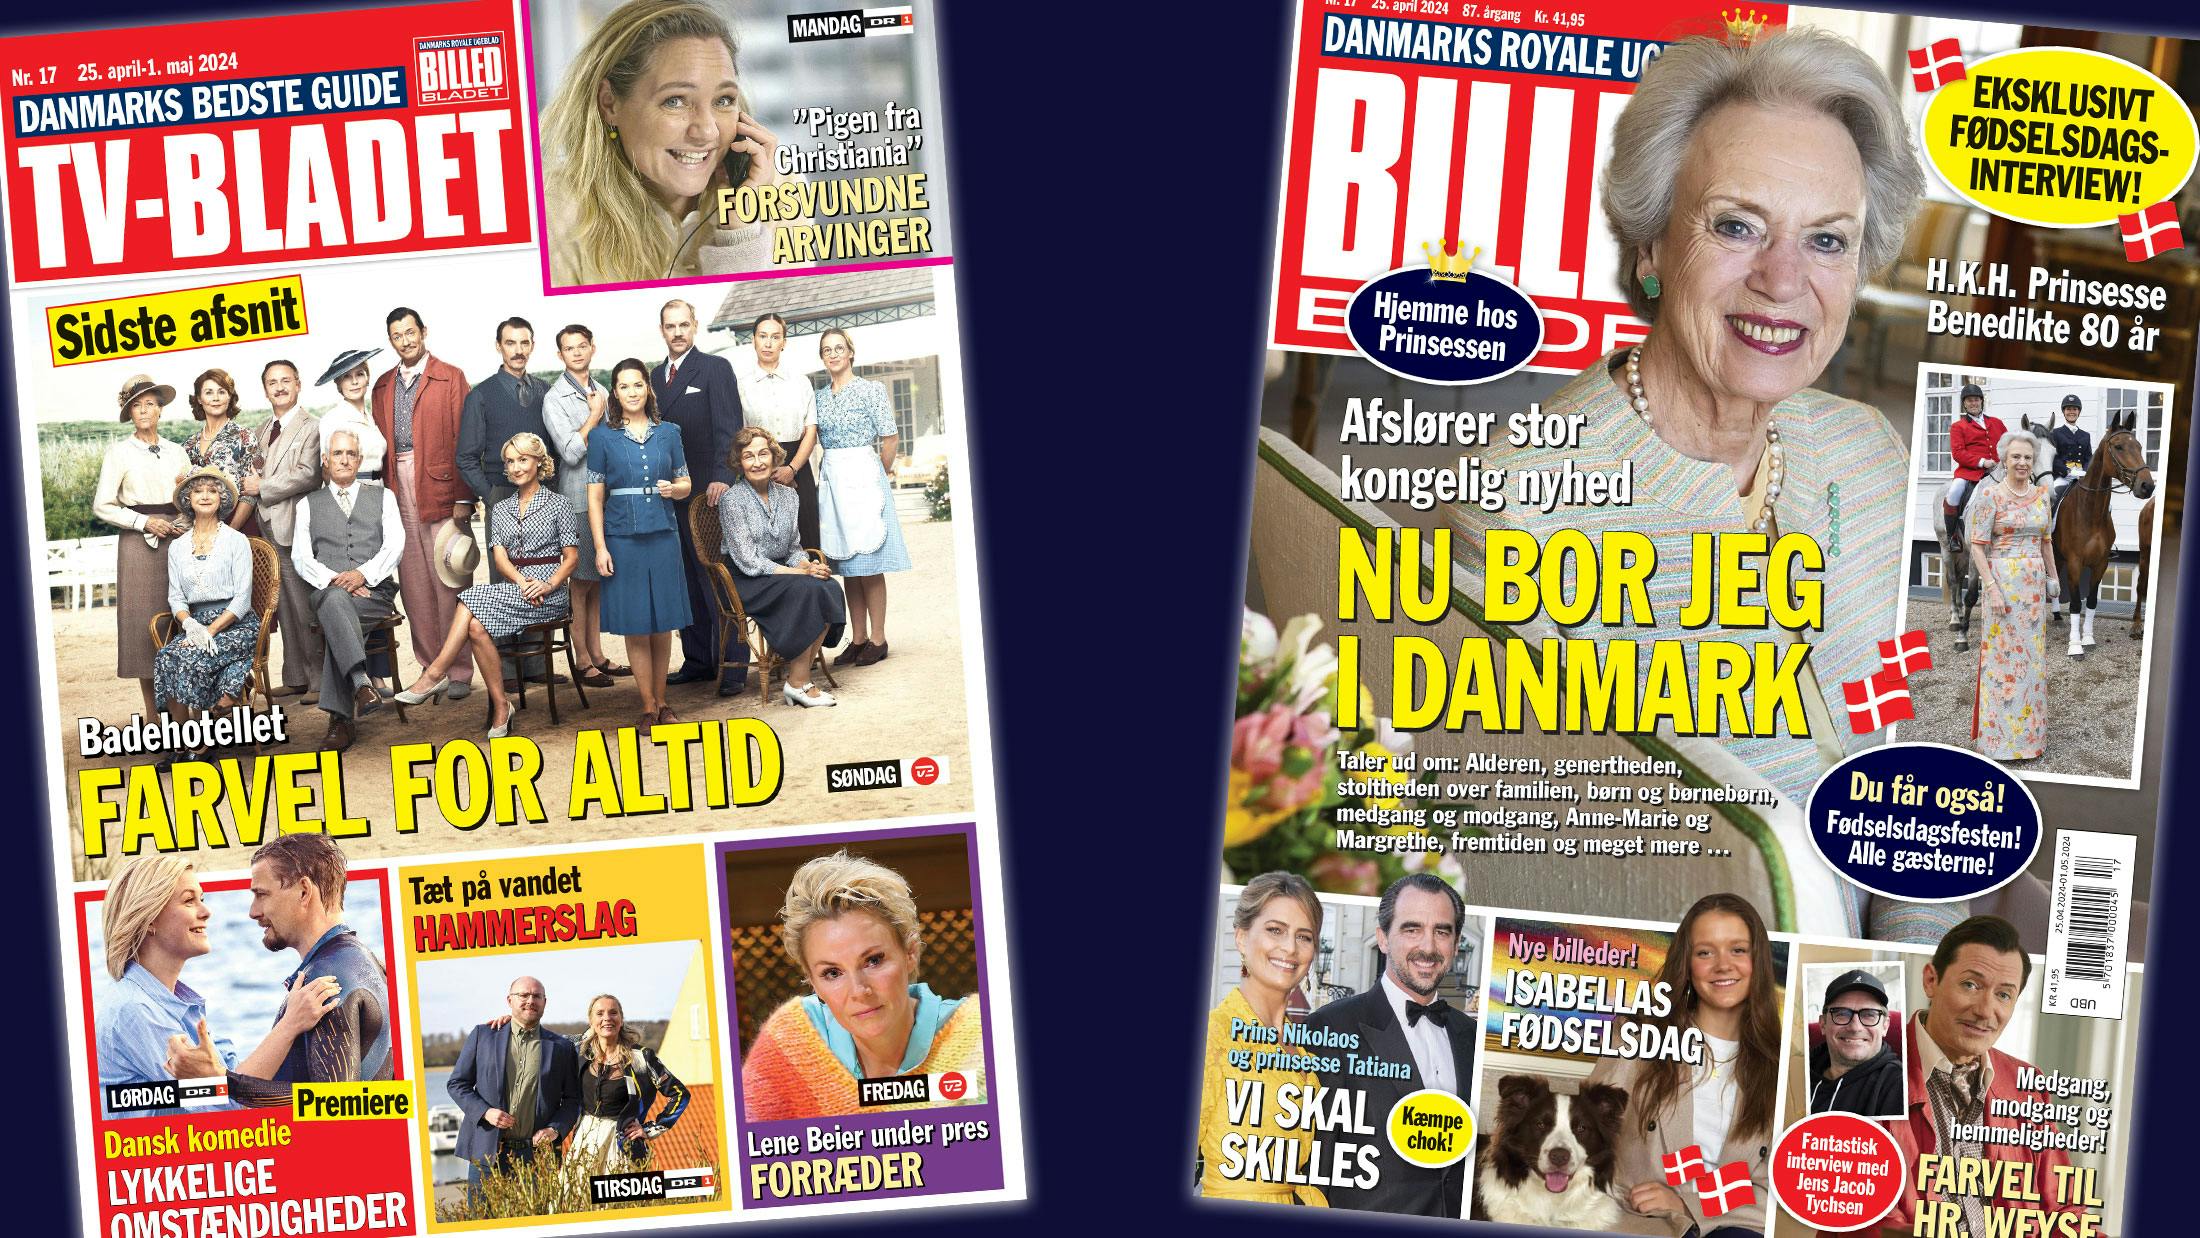 https://imgix.billedbladet.dk/2024-04-25/Webgrafik_BB17-forsider.jpg